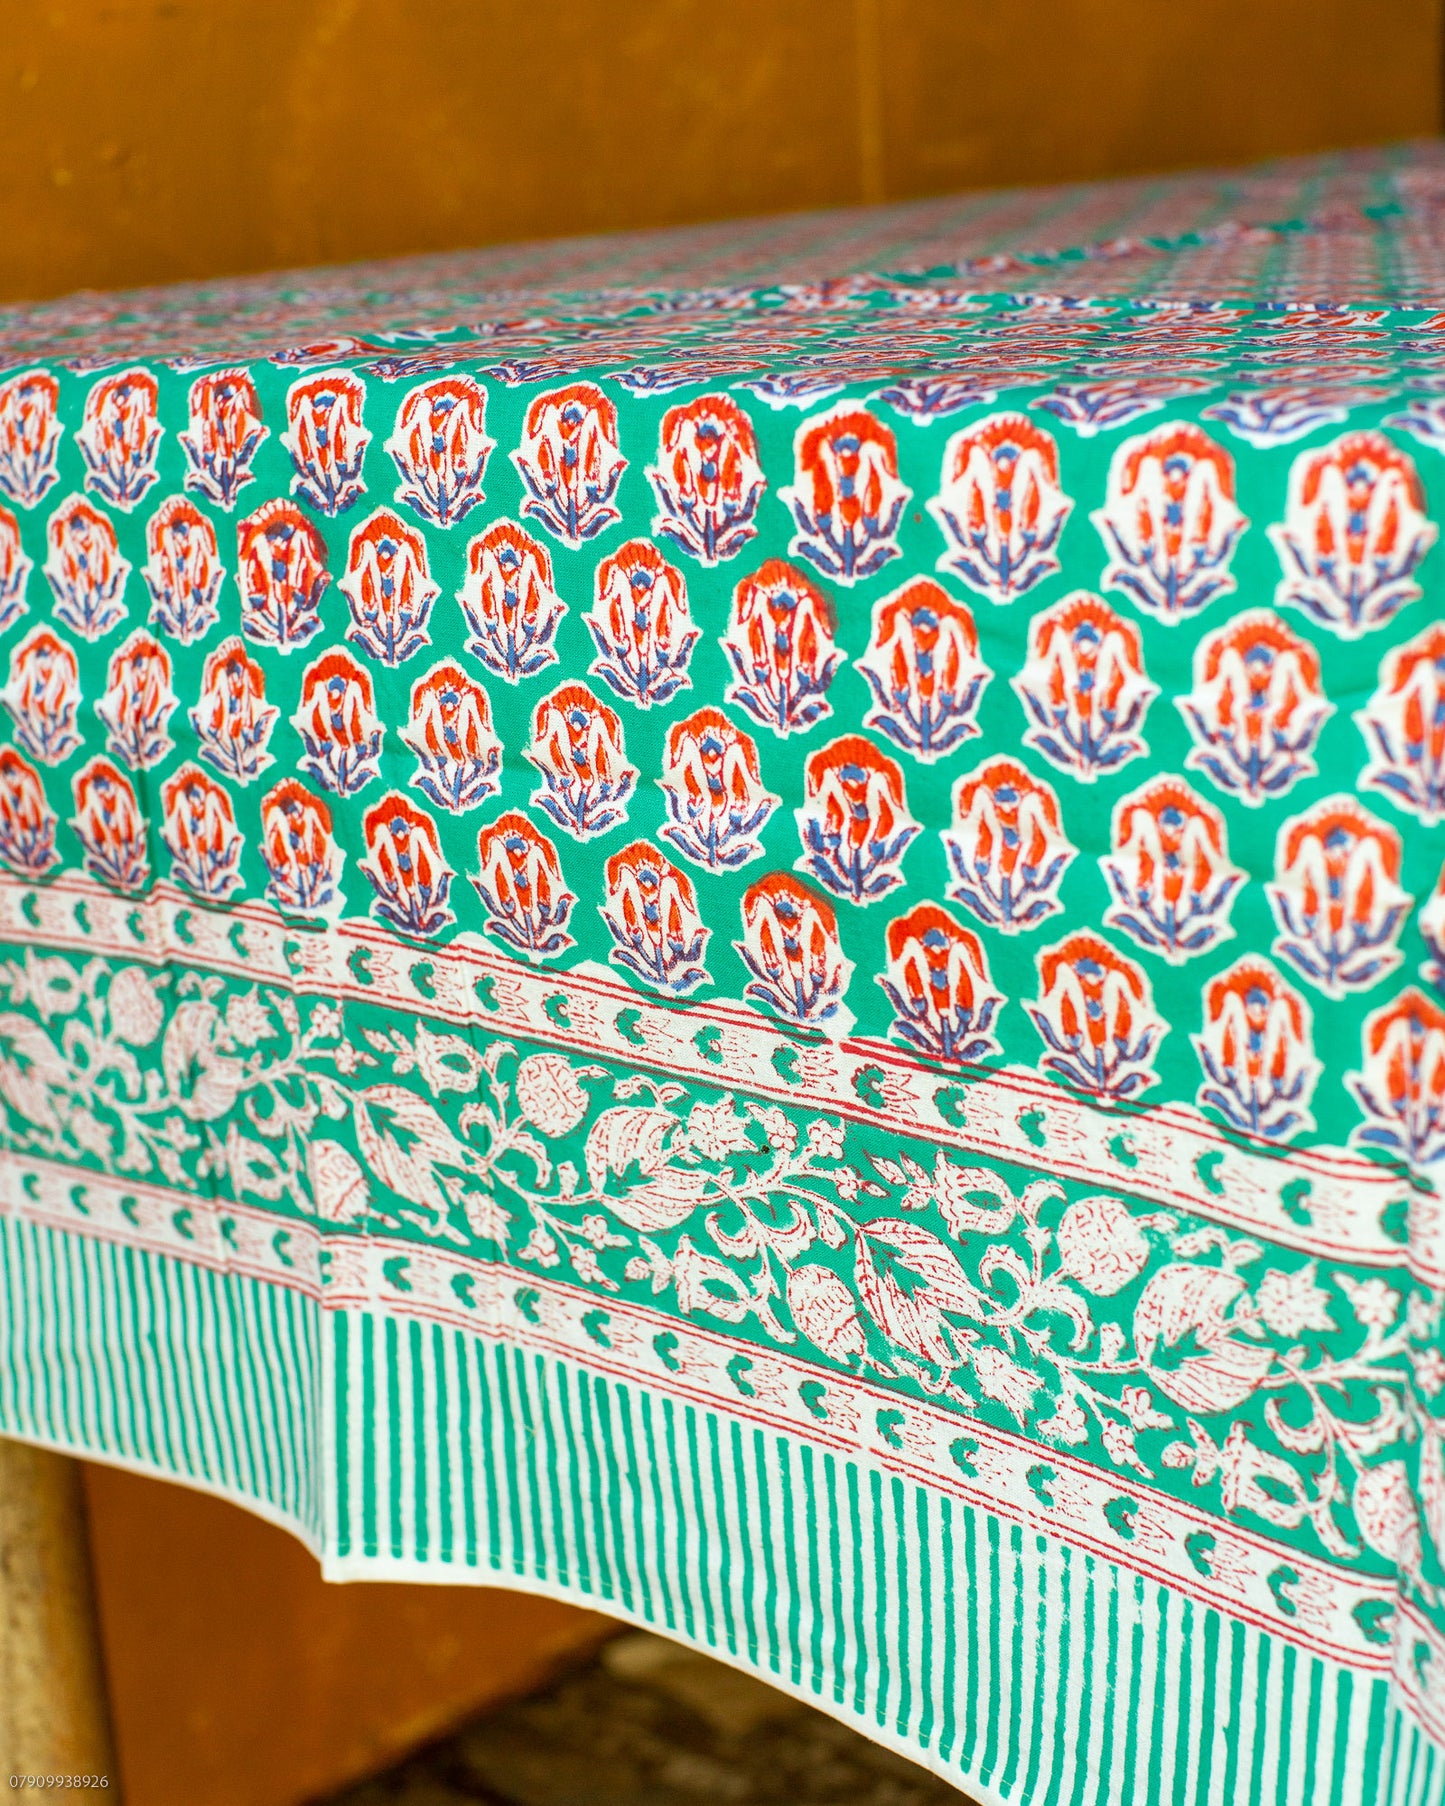 Print Block Tablecloth/Bed Cover